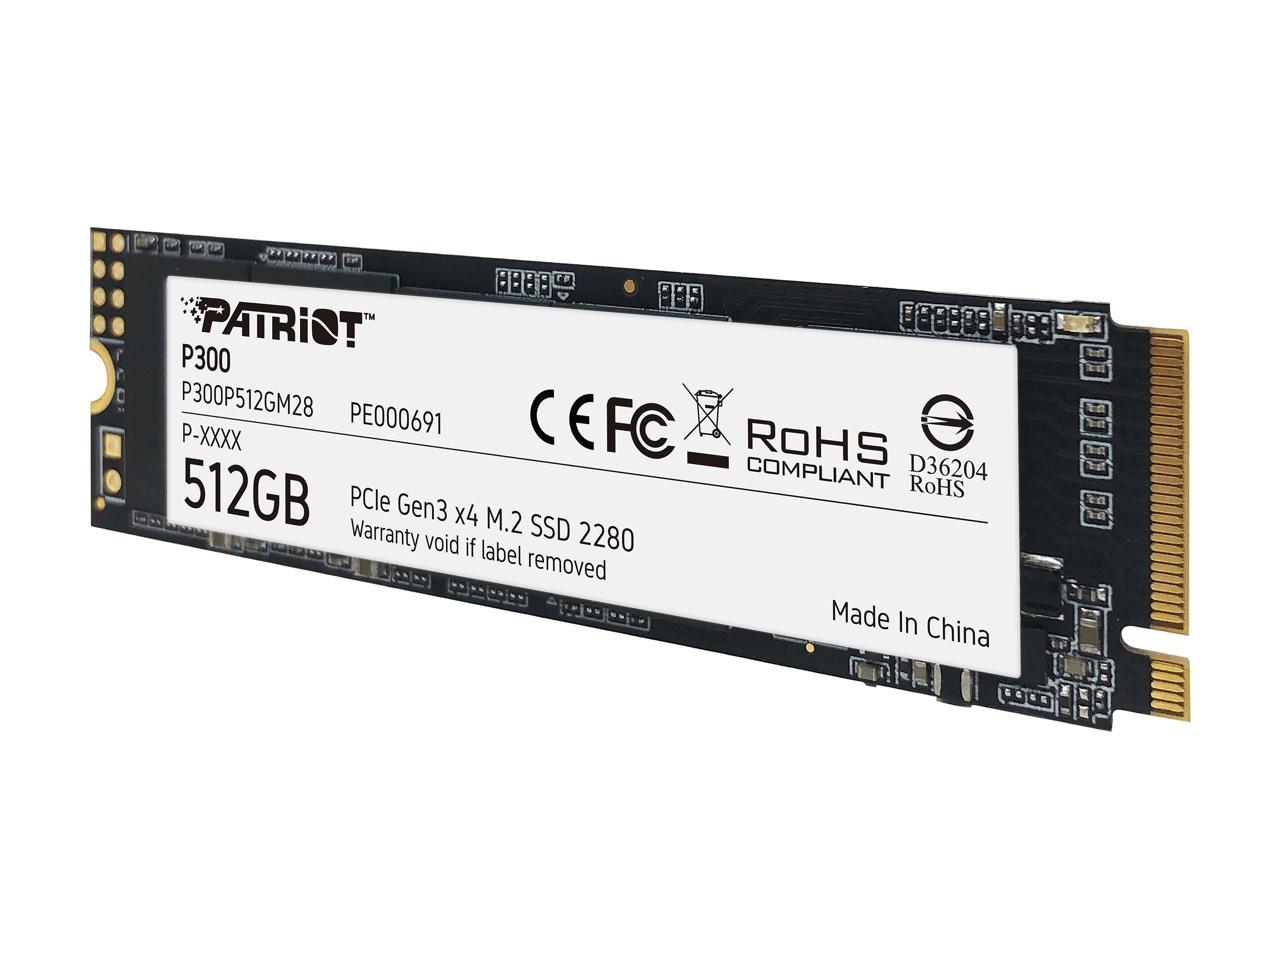 Patriot P300 M.2 2280 512GB PCIe Gen3 x4, NVMe 1.3 Internal Solid State Drive (SSD) P300P512GM28